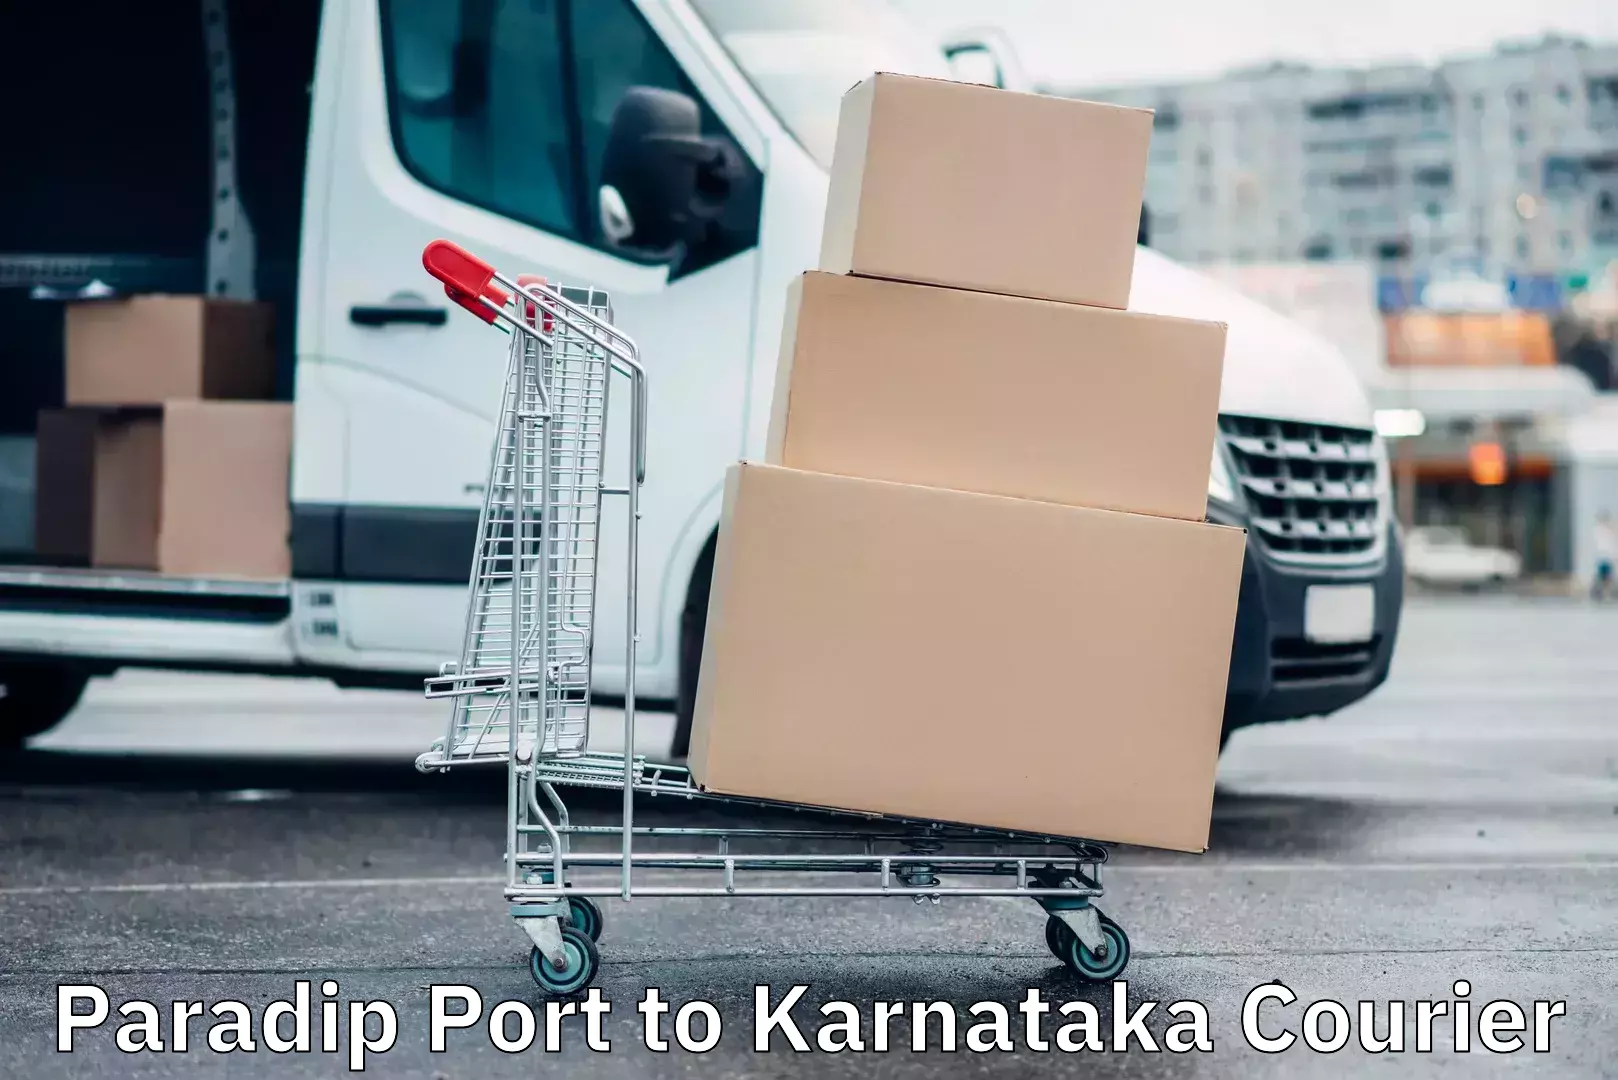 Courier app Paradip Port to Karnataka